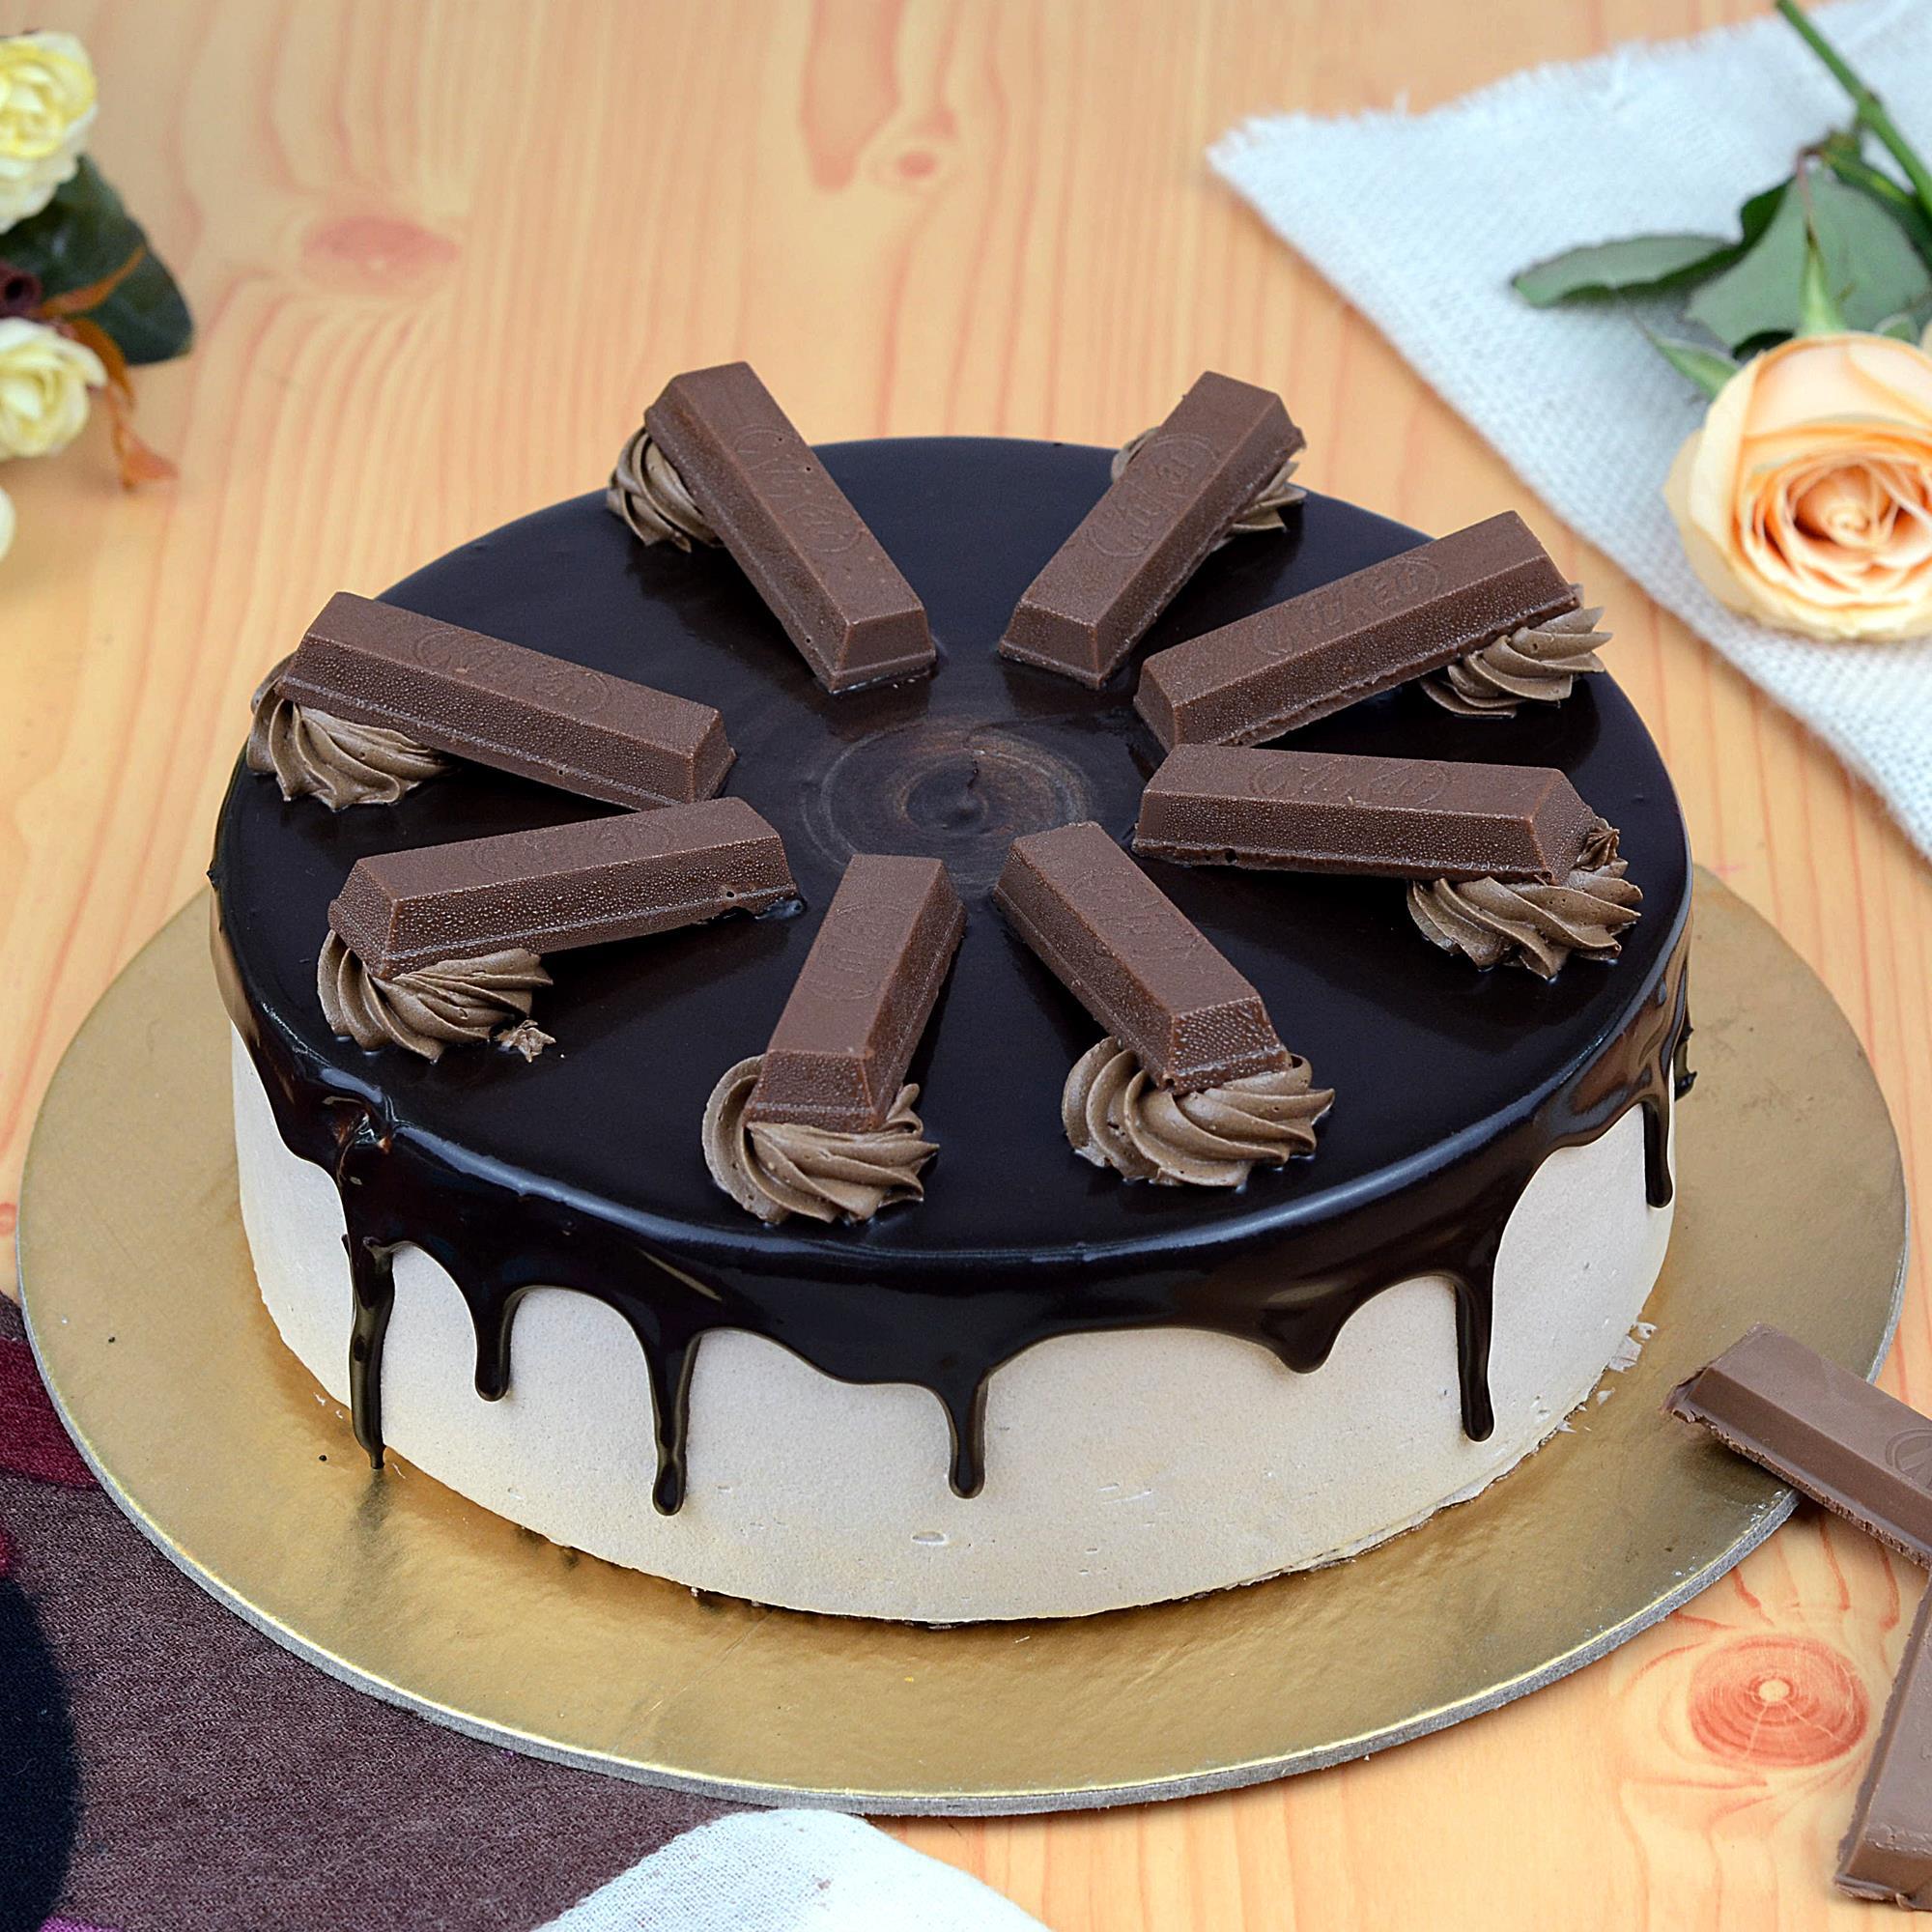 Oreo KitKat Chocolate Cream Cake | SAFEGRAIN